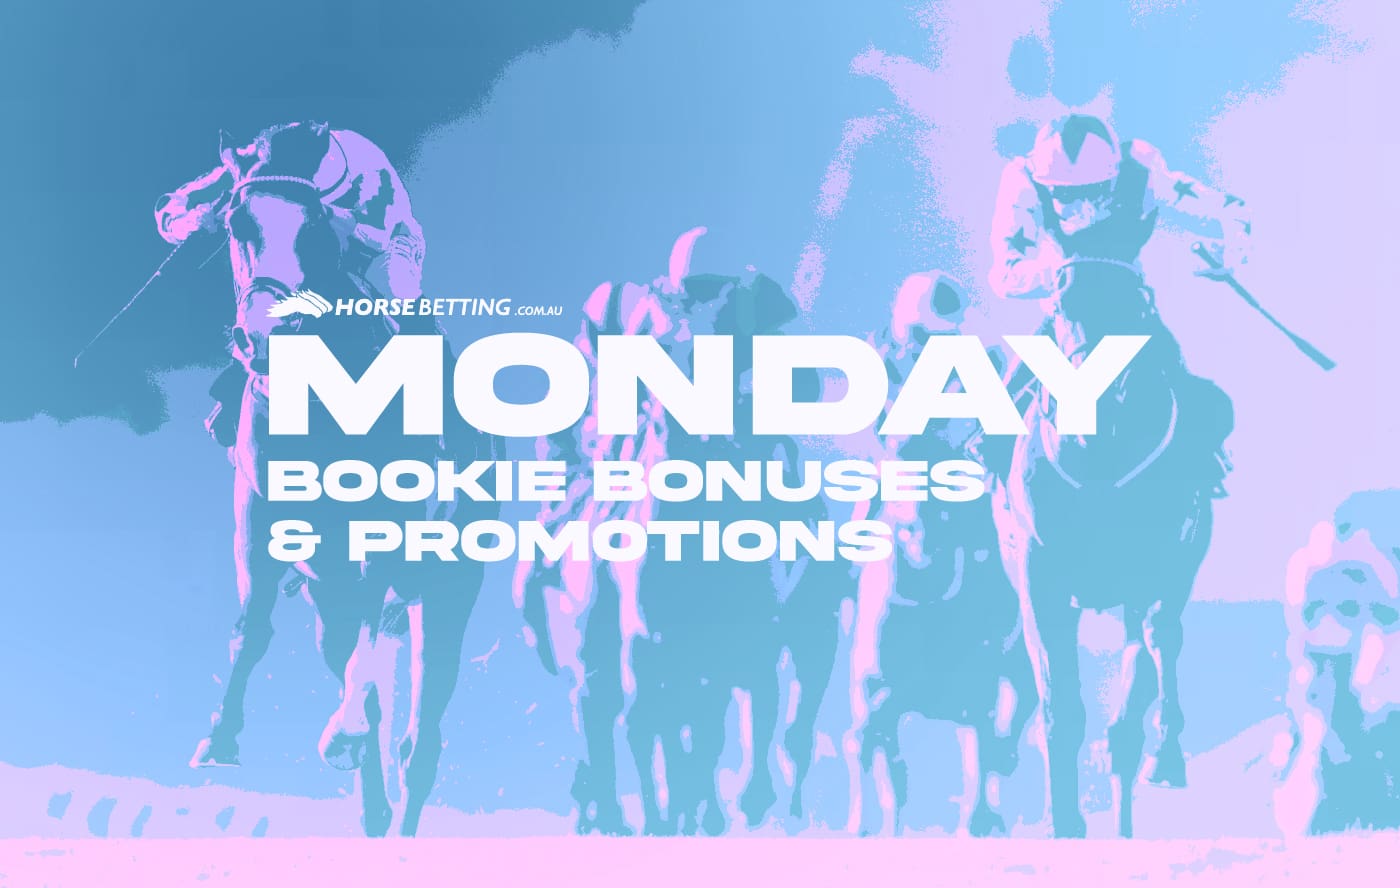 Horse racing bookmaker bonus & promotion offers for December 11